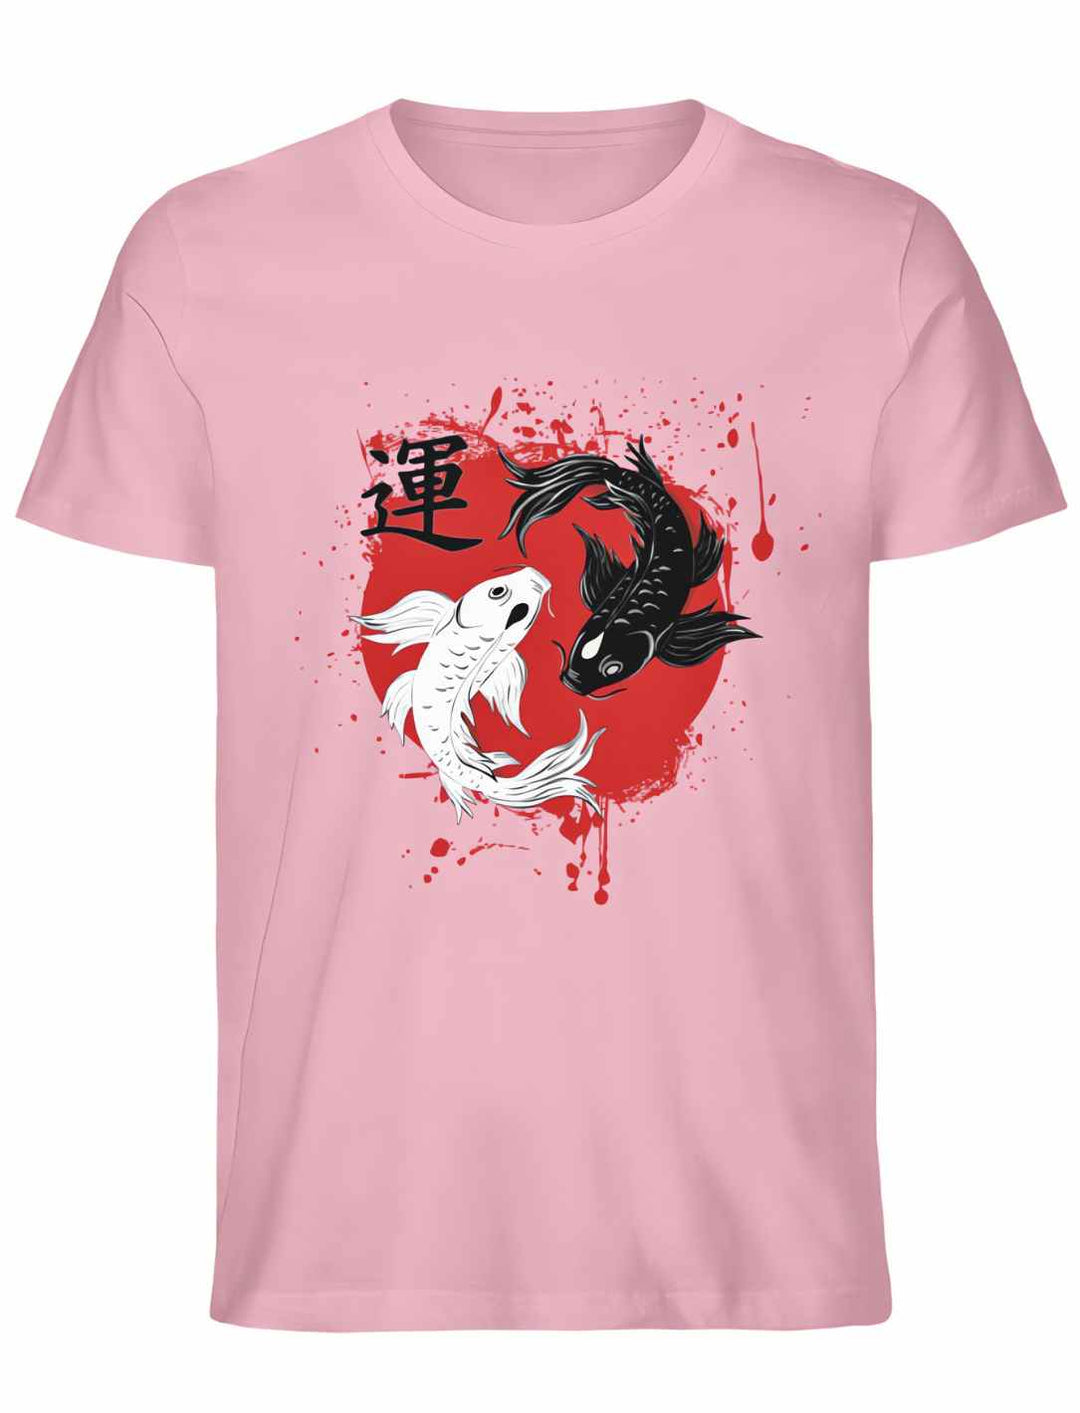 Harmonic Koi Unisex T-Shirt in Cotton Pink – Sanfte Rosa-Farbe mit elegantem Koi-Design.